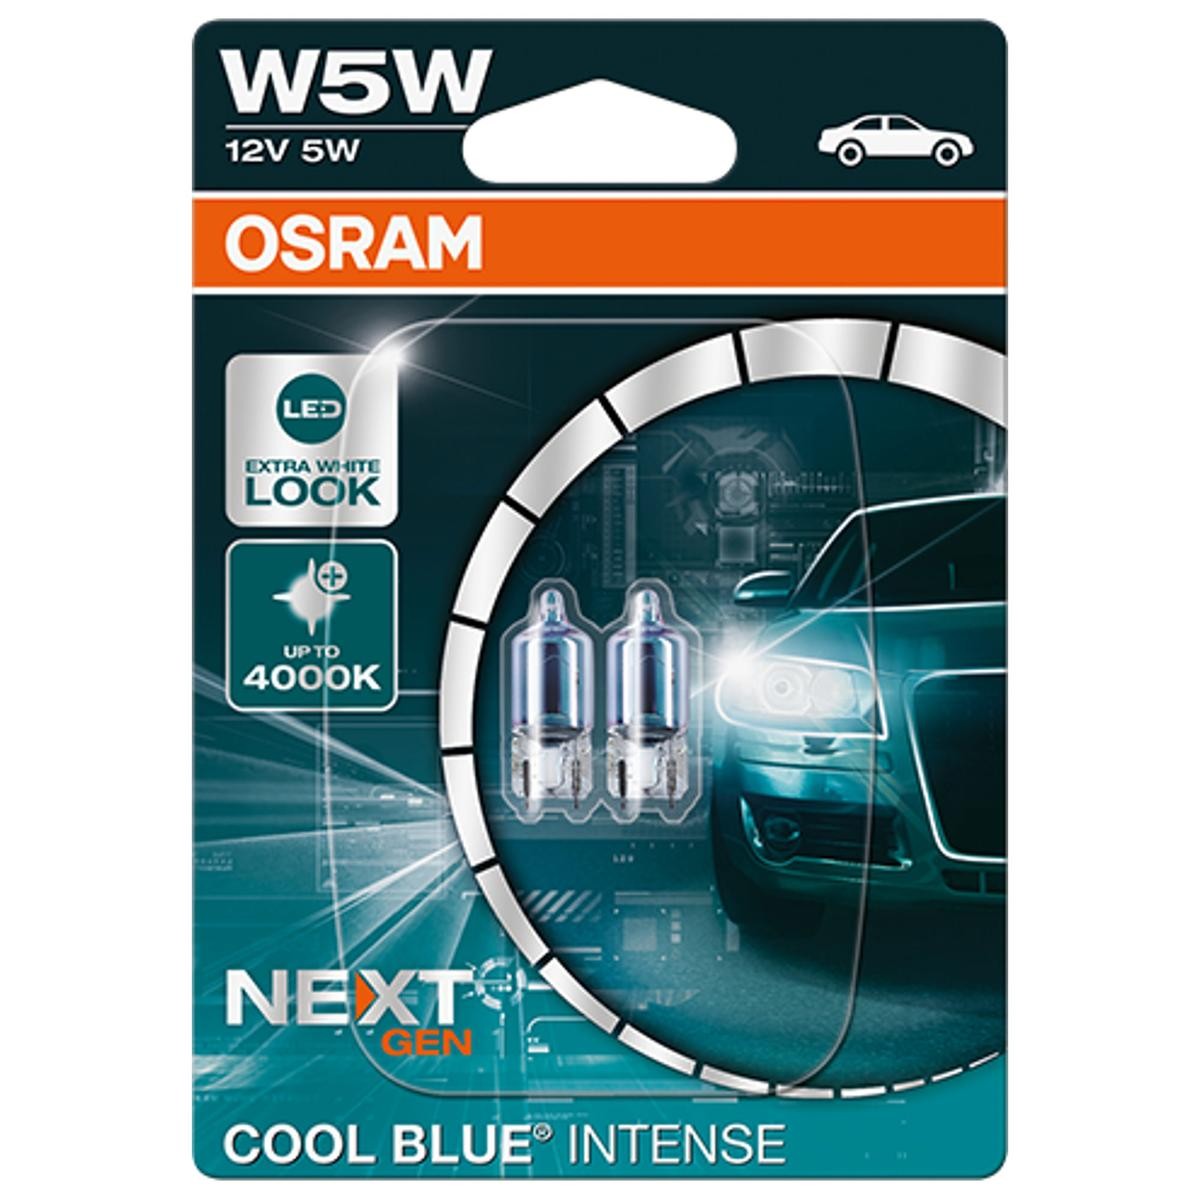 APRILIA SRV Blinkerbirne 12V 5W, W5W OSRAM COOL BLUE INTENSE next Generation 2825CBN-02B